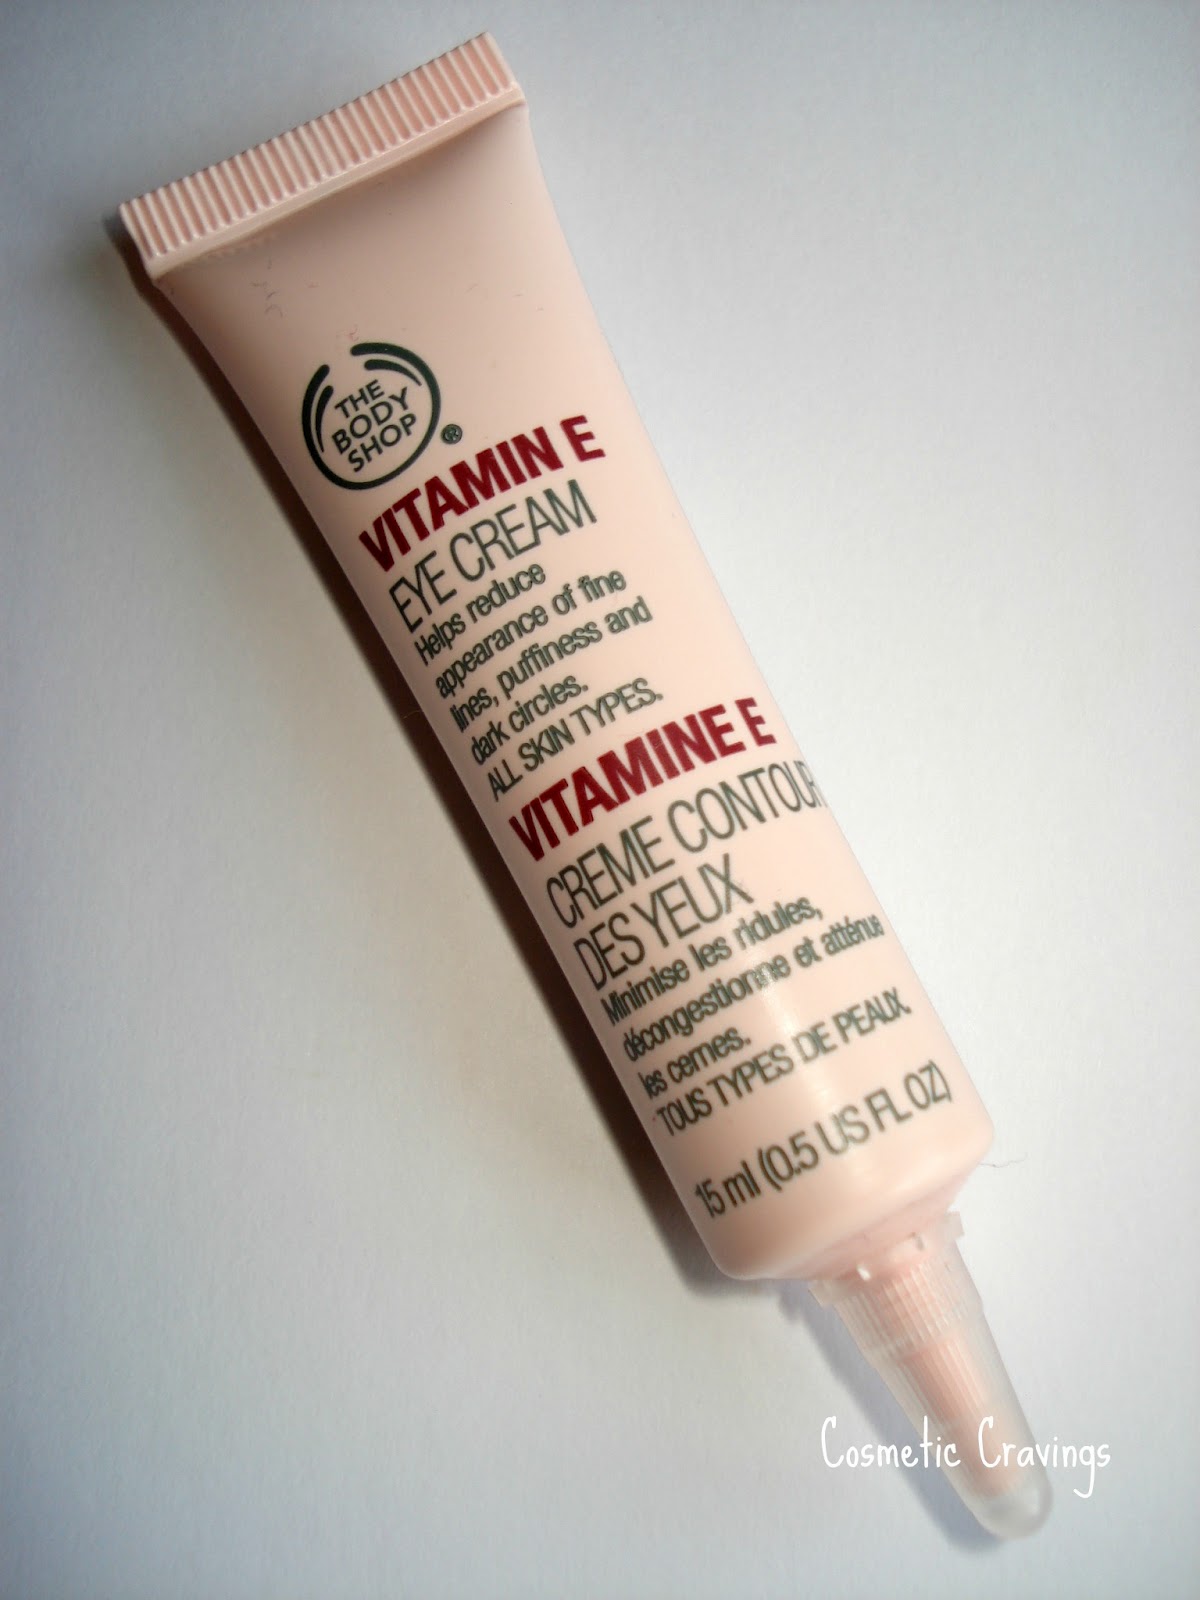 Cosmetic Cravings Review The Body Shop Vitamin E Eye Cream